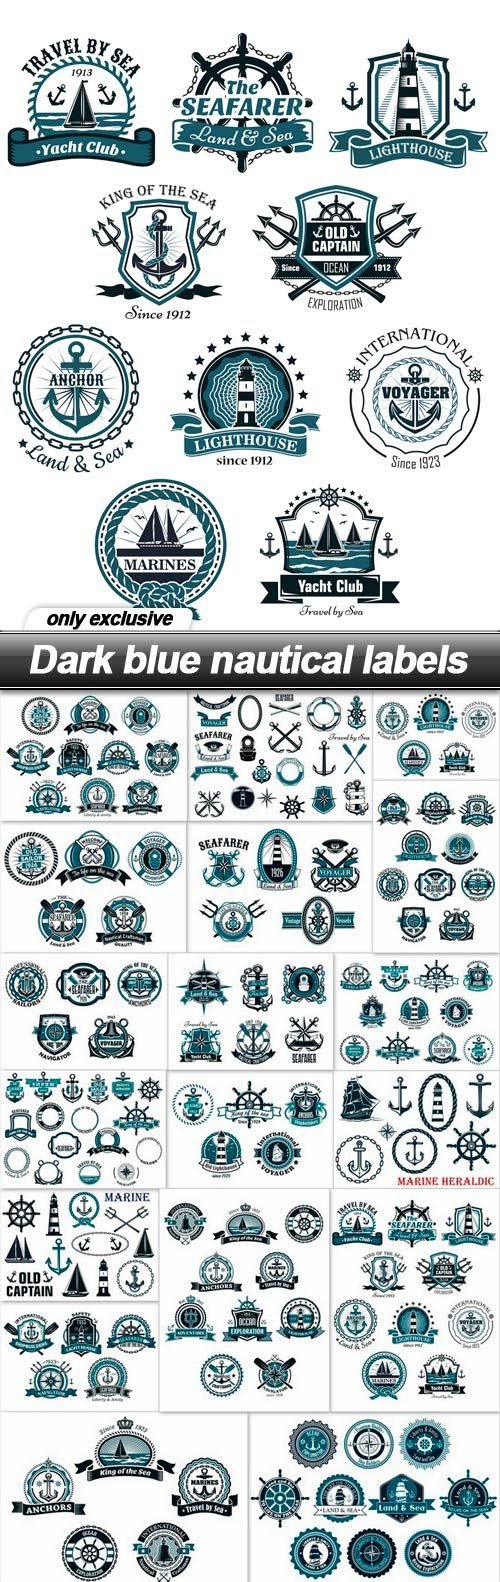 Dark blue nautical labels - 25 EPS